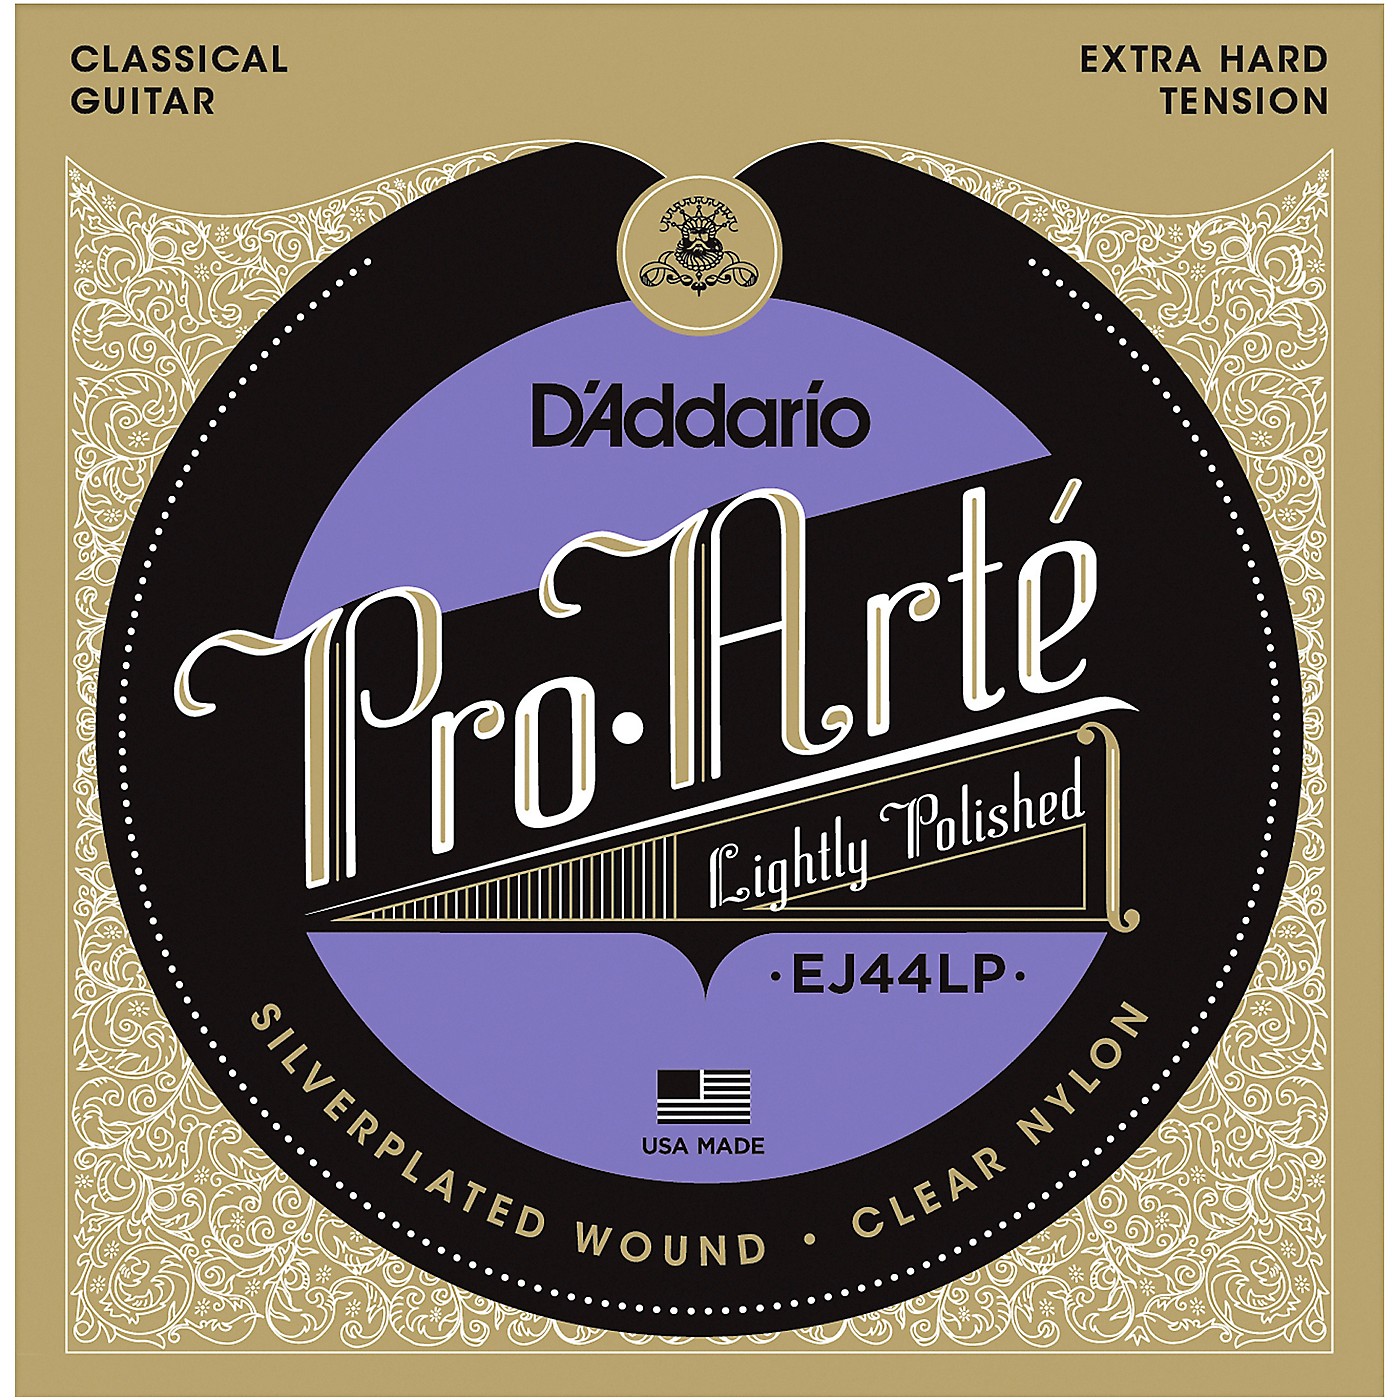 D'Addario EJ44LP Pro-Arte Composites Extra Hard Tension Classical Guitar Strings thumbnail